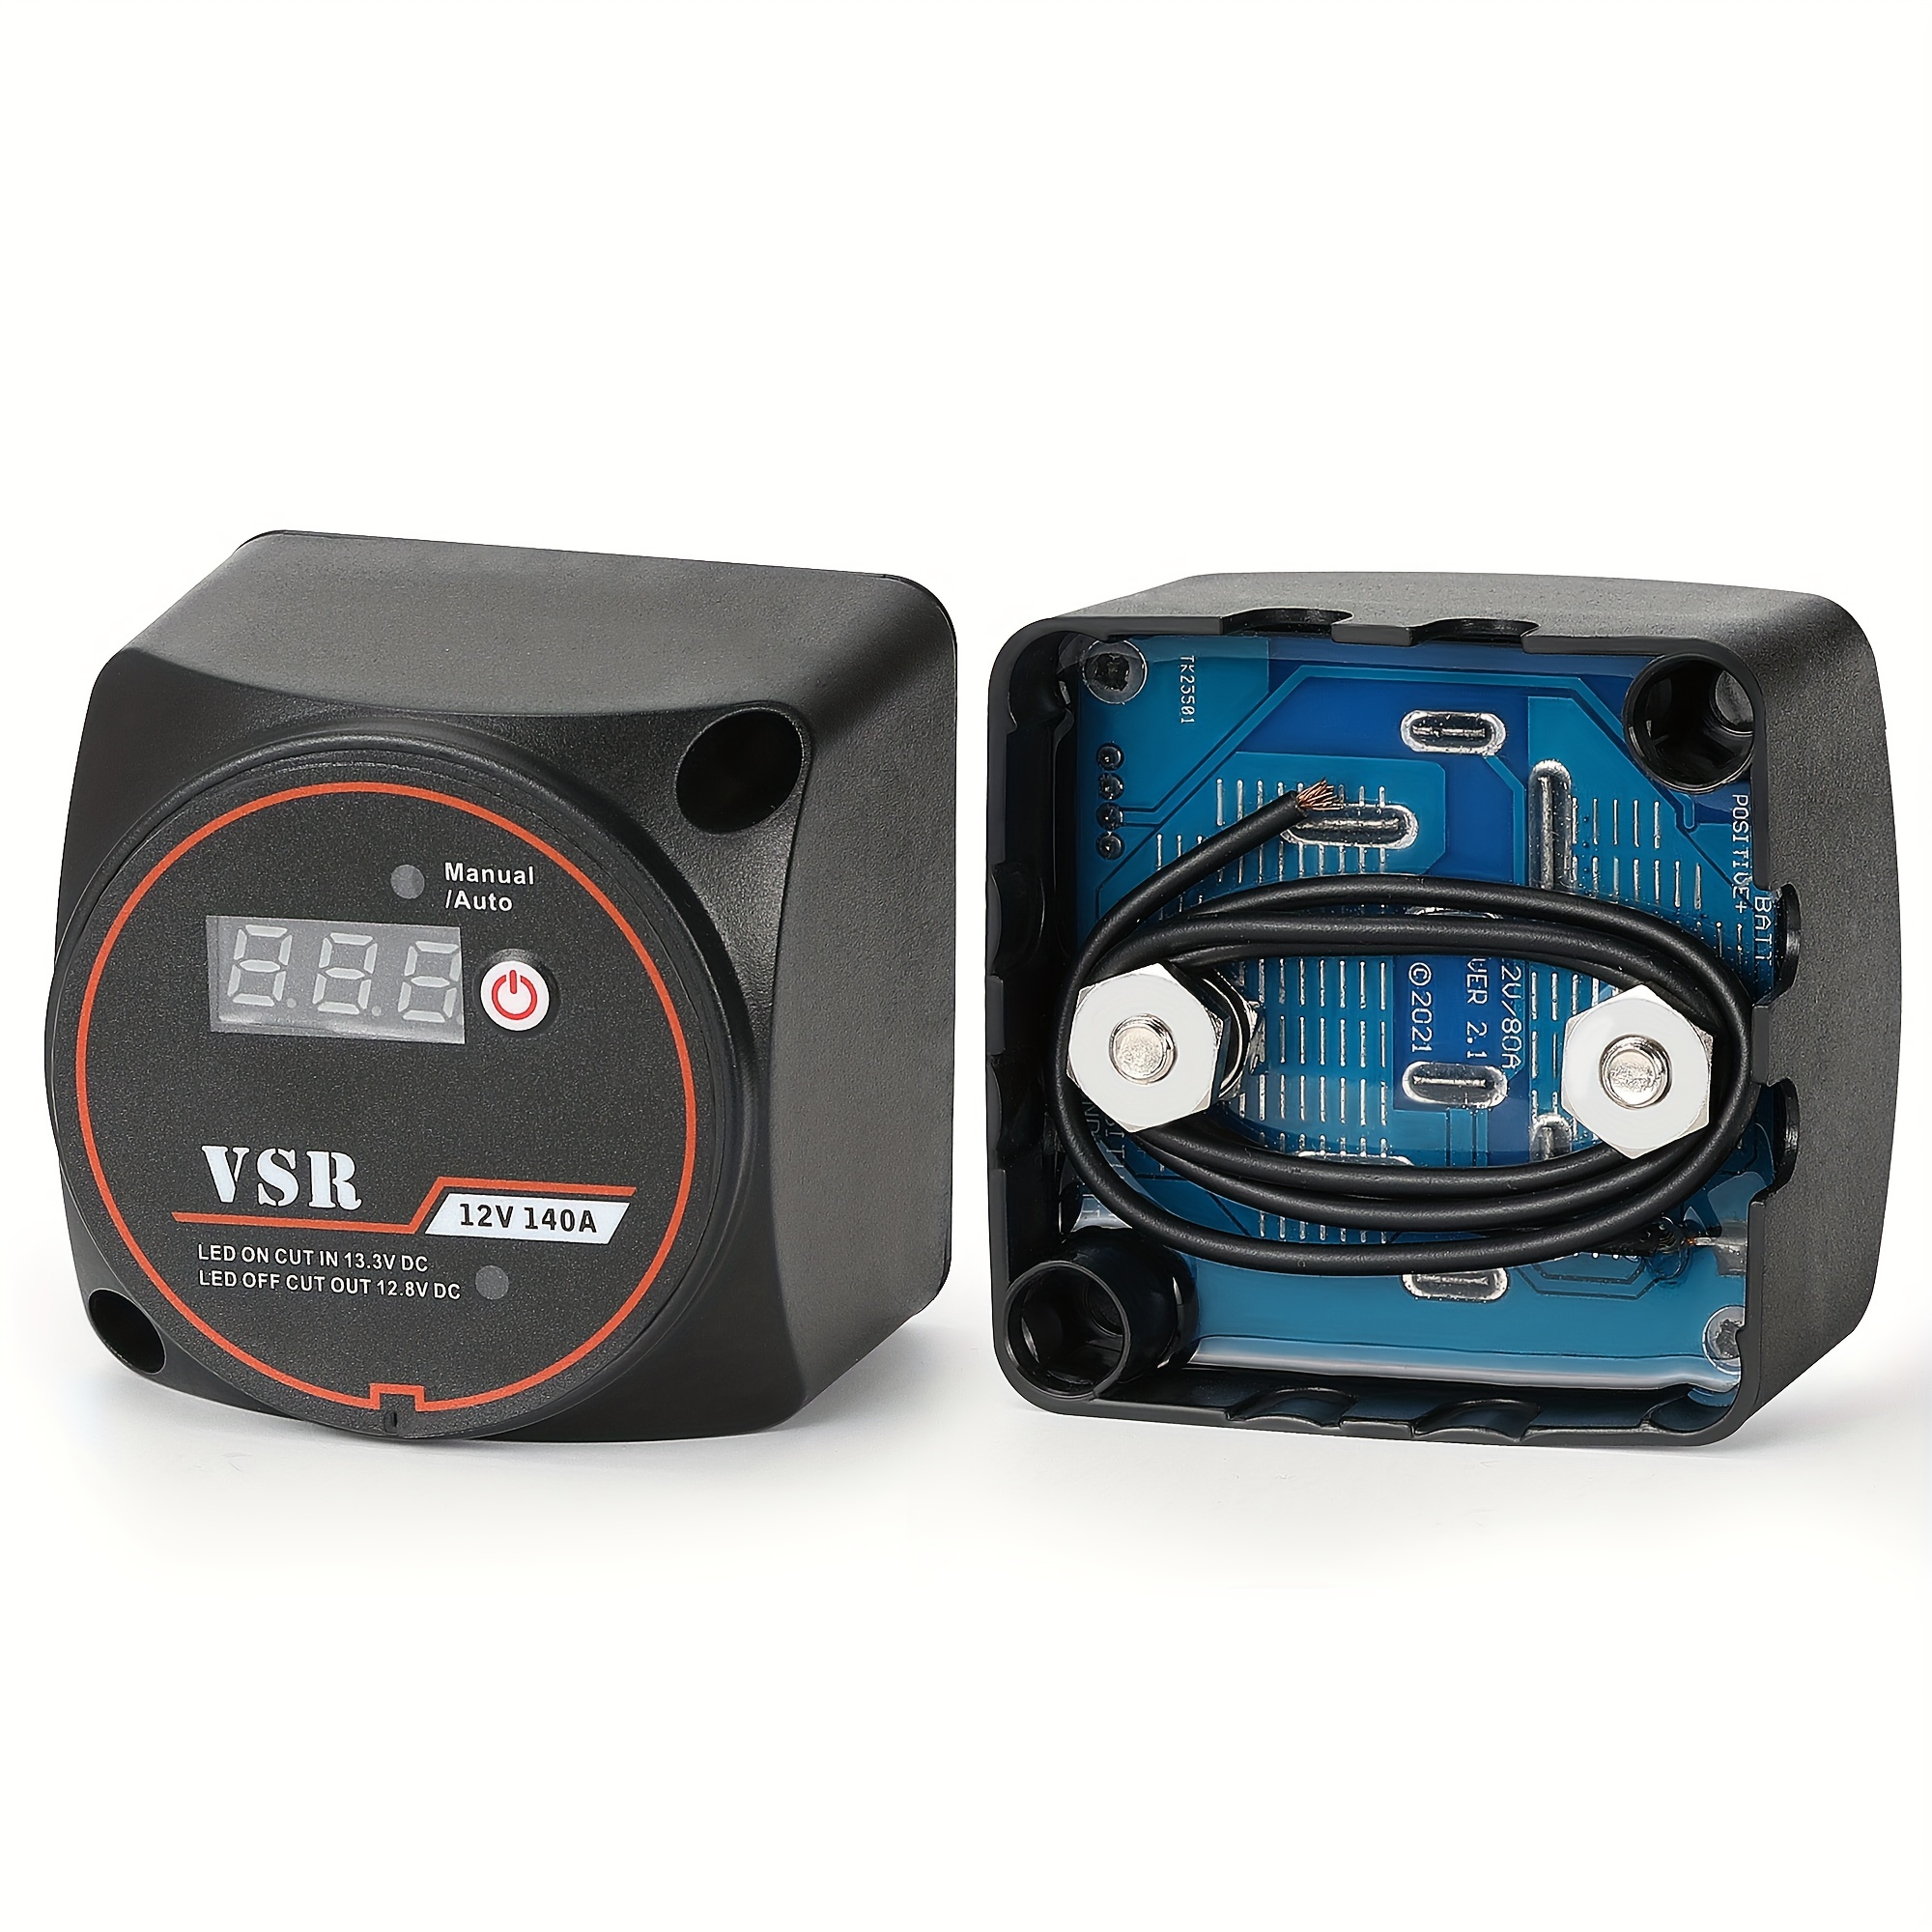 12v 140a Ip67 Vsr Smart Dual Battery Isolator Manual Auto Control